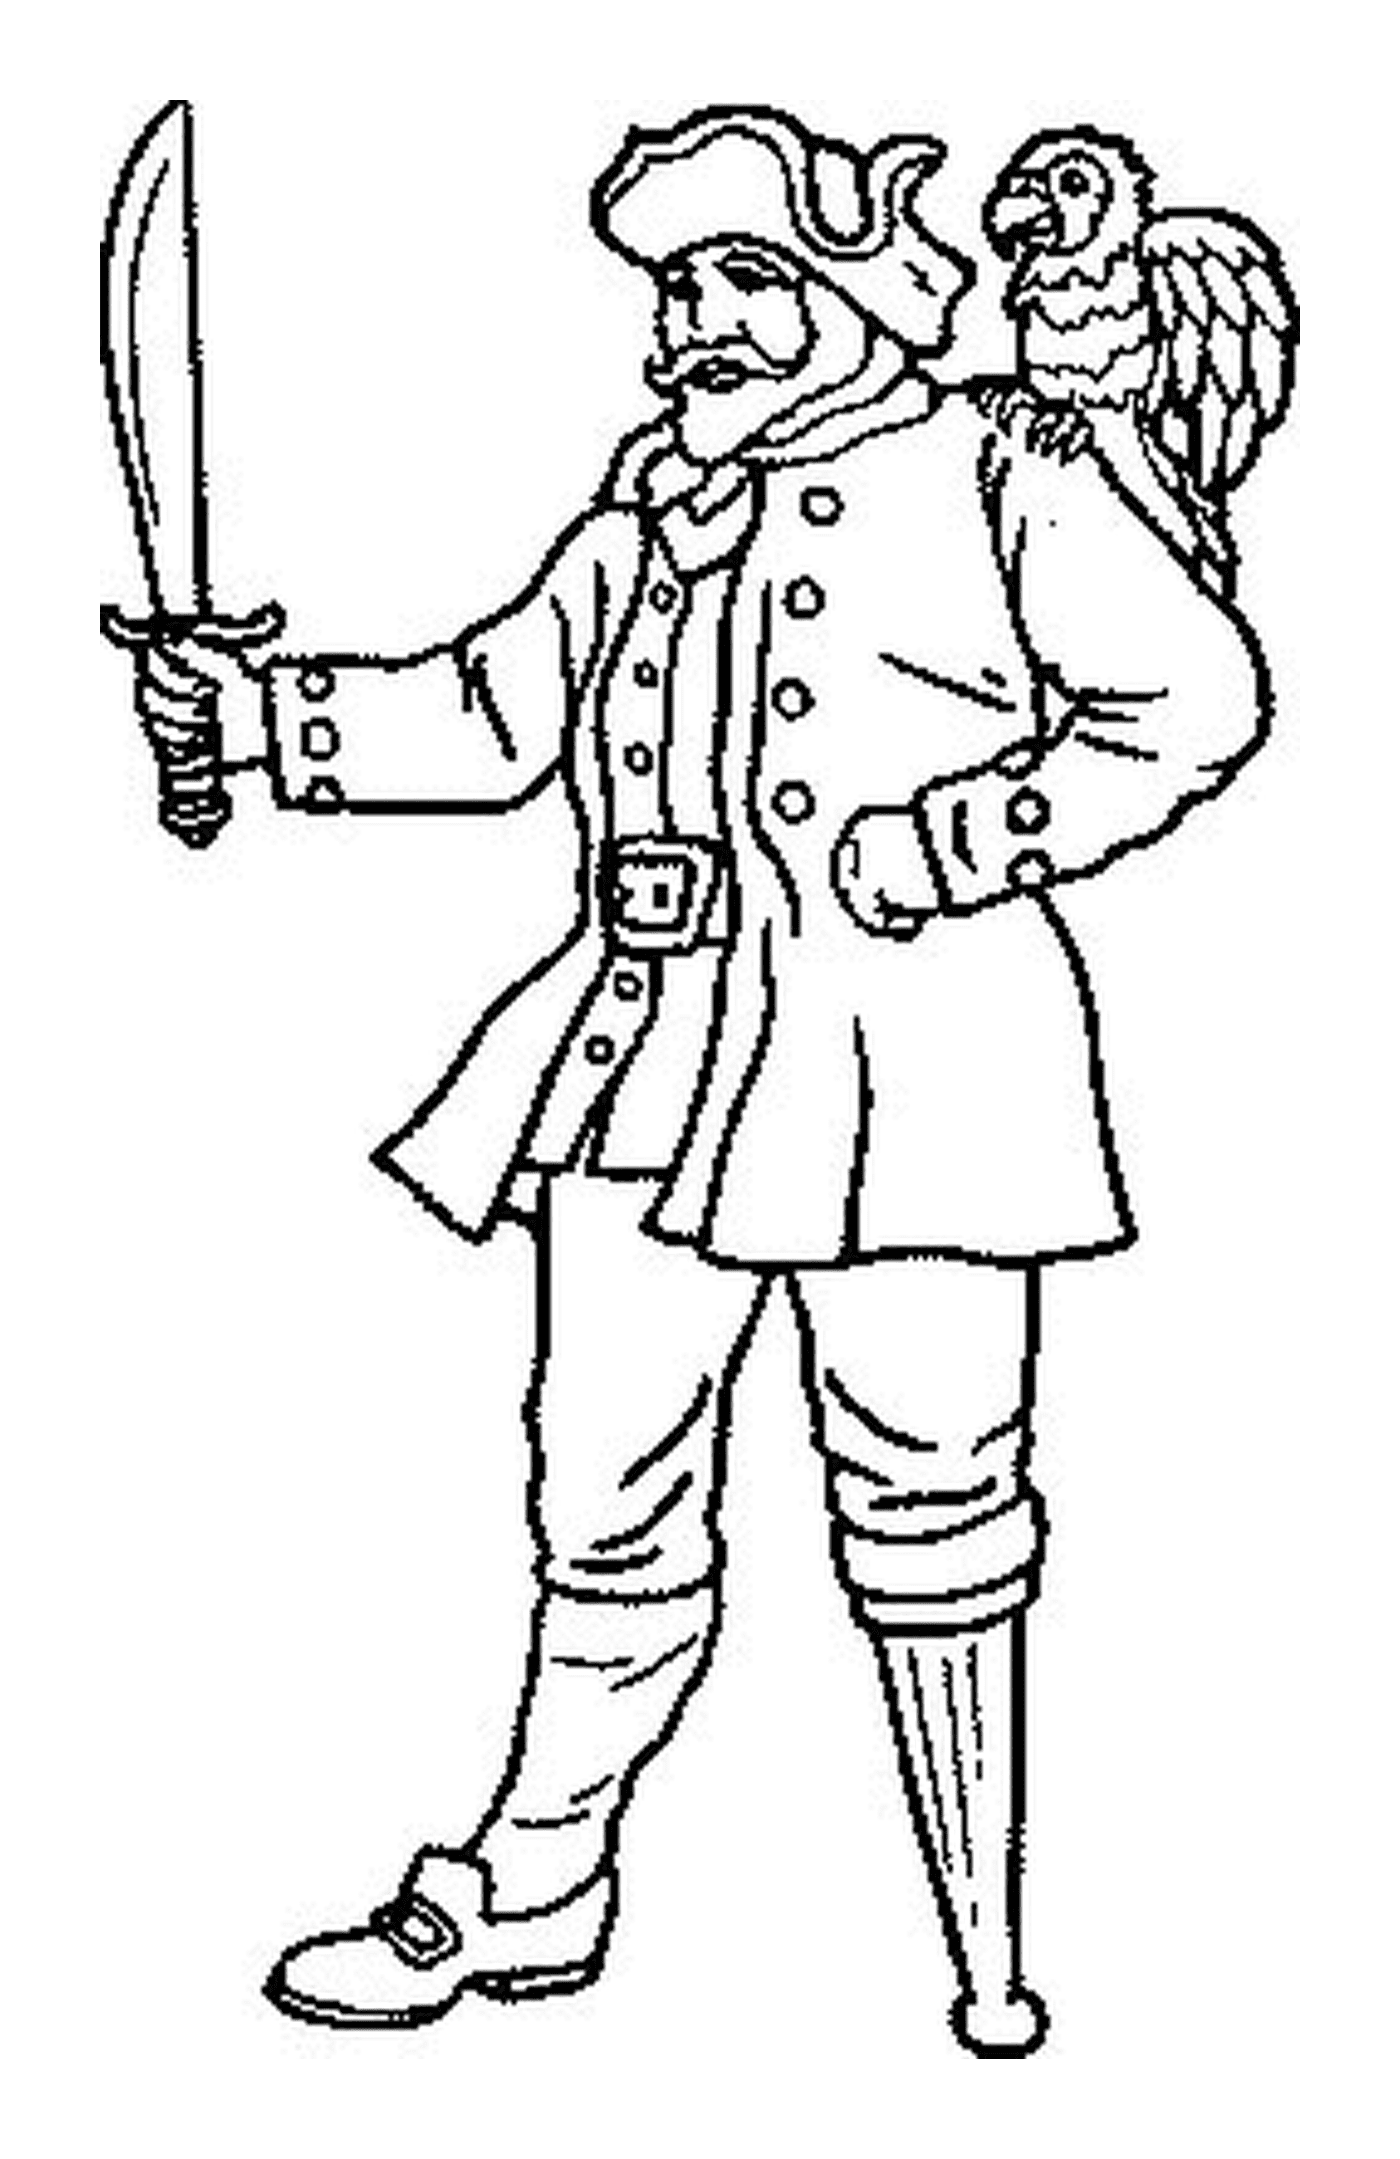  A captain with a wooden leg 